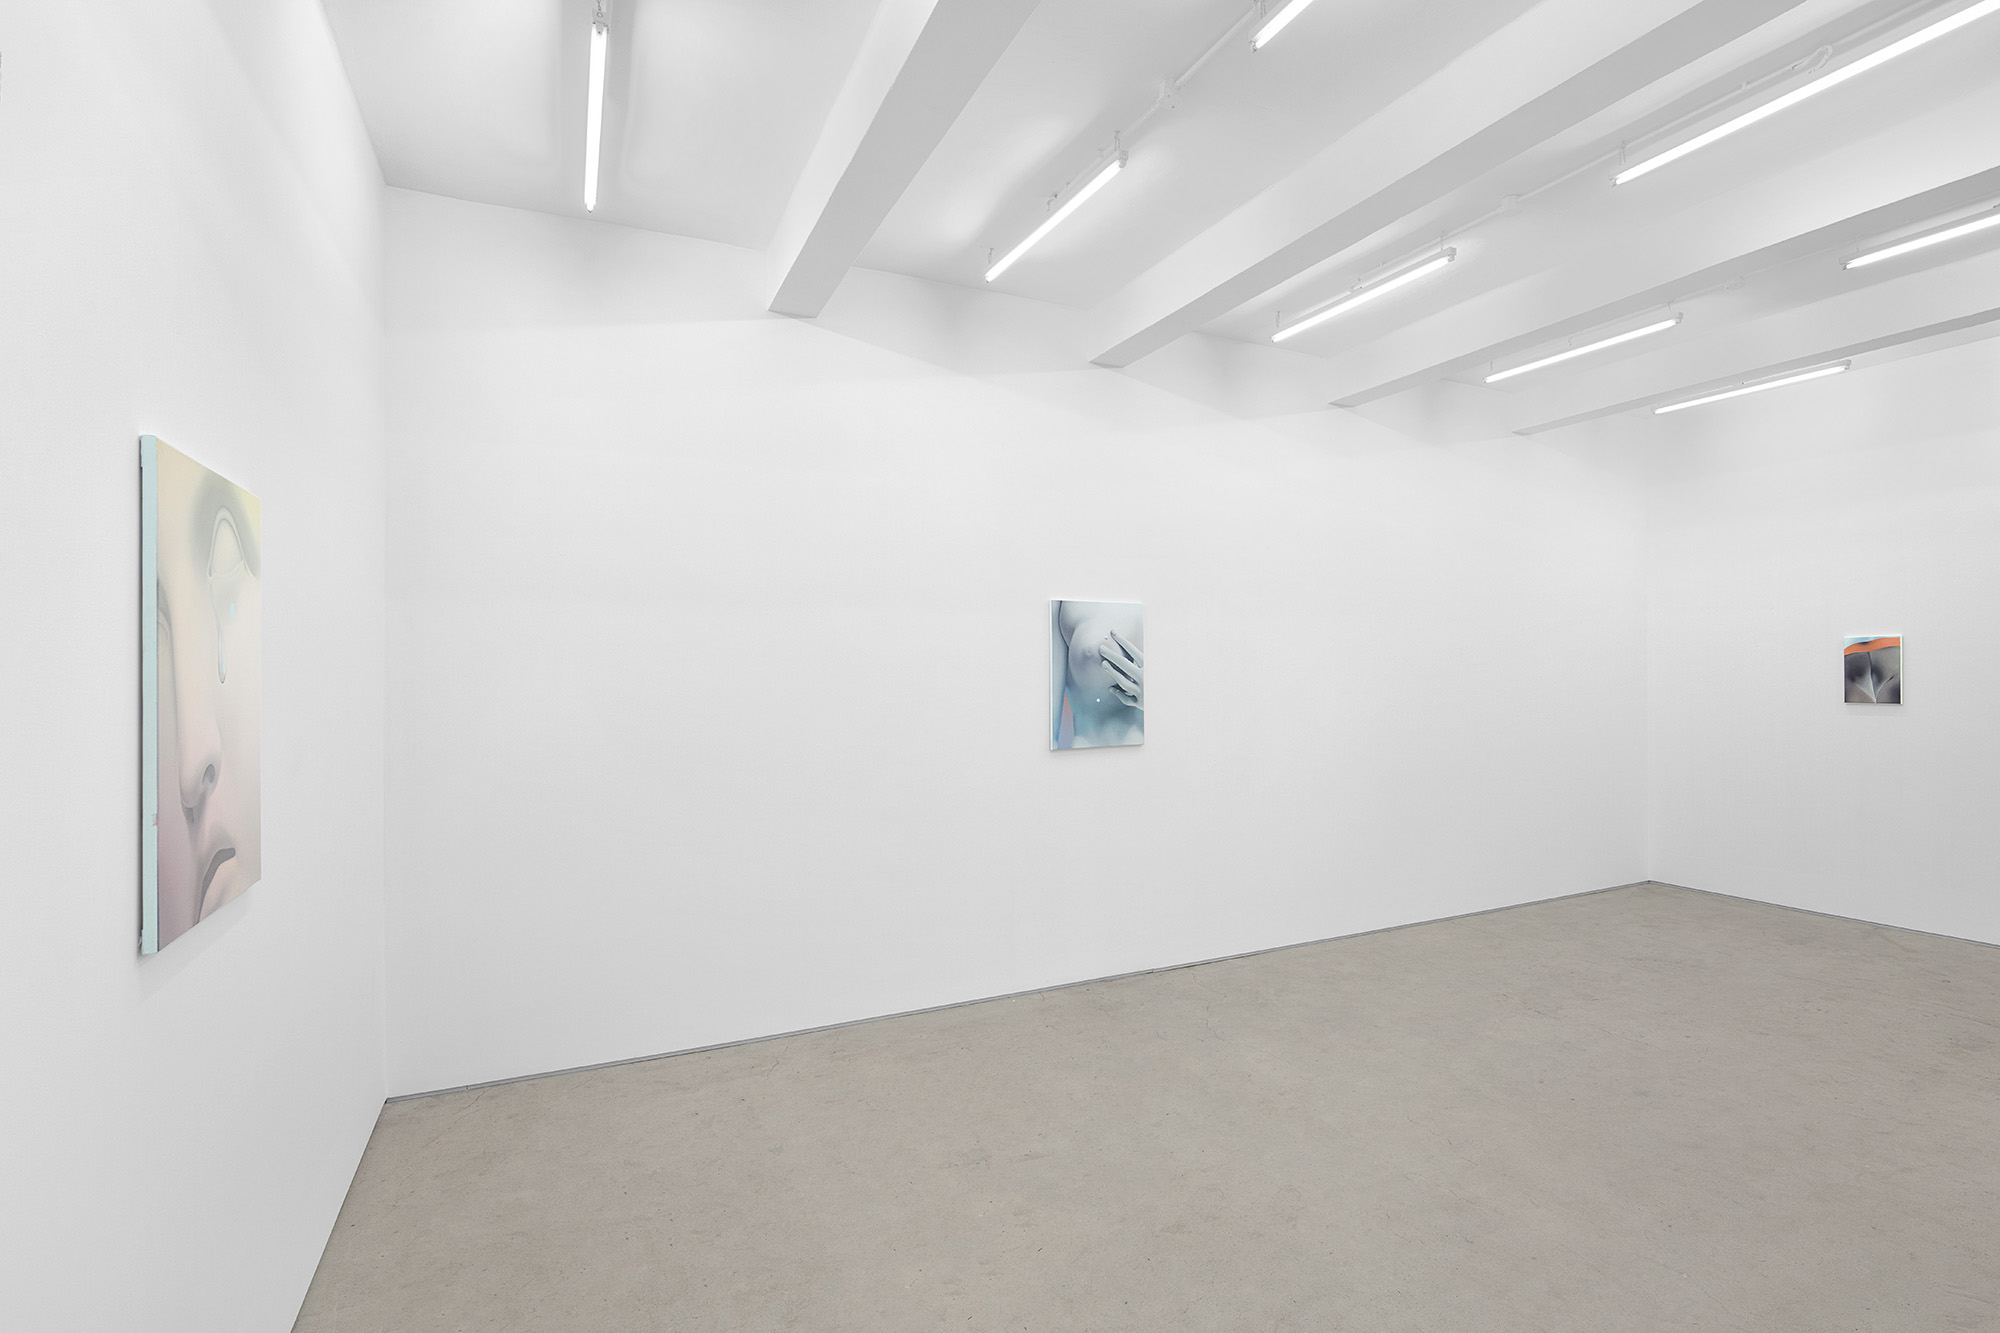 Vivian Greven, The Negatives, solo exhibition at Gallery Vacancy, installation view 19